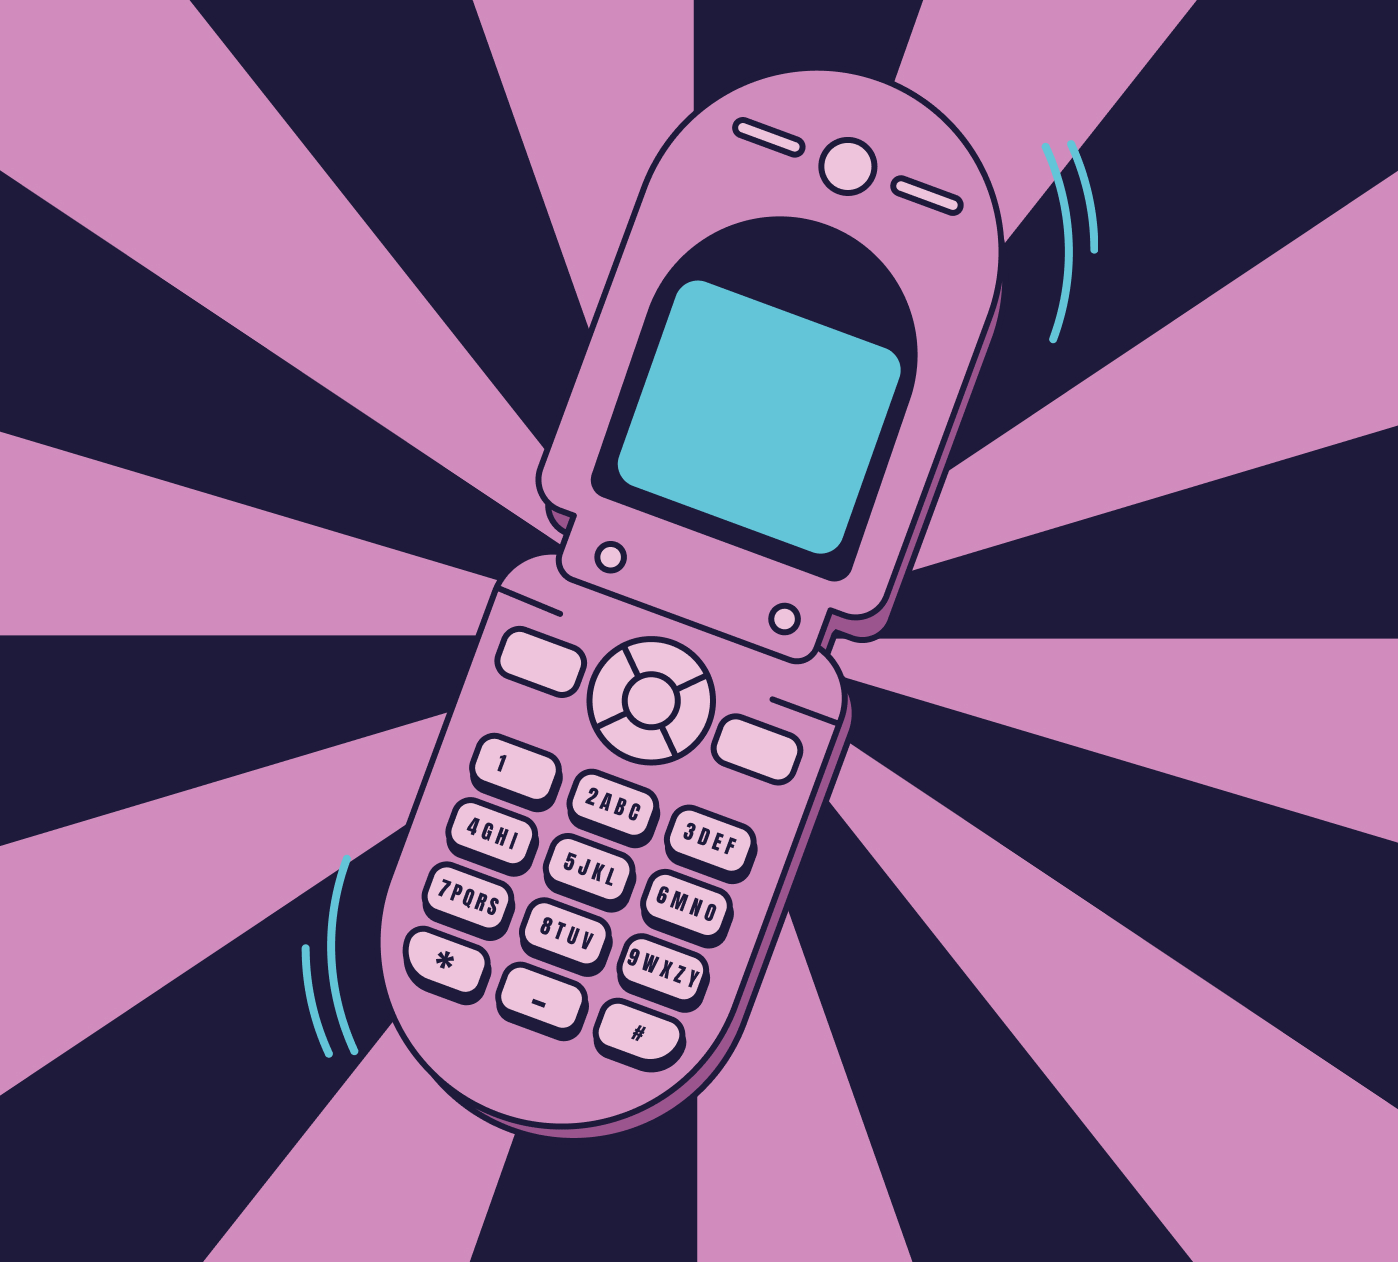 Illustration of flip phone vibrating with starburst background. Flashing bubble that says "Text Us".